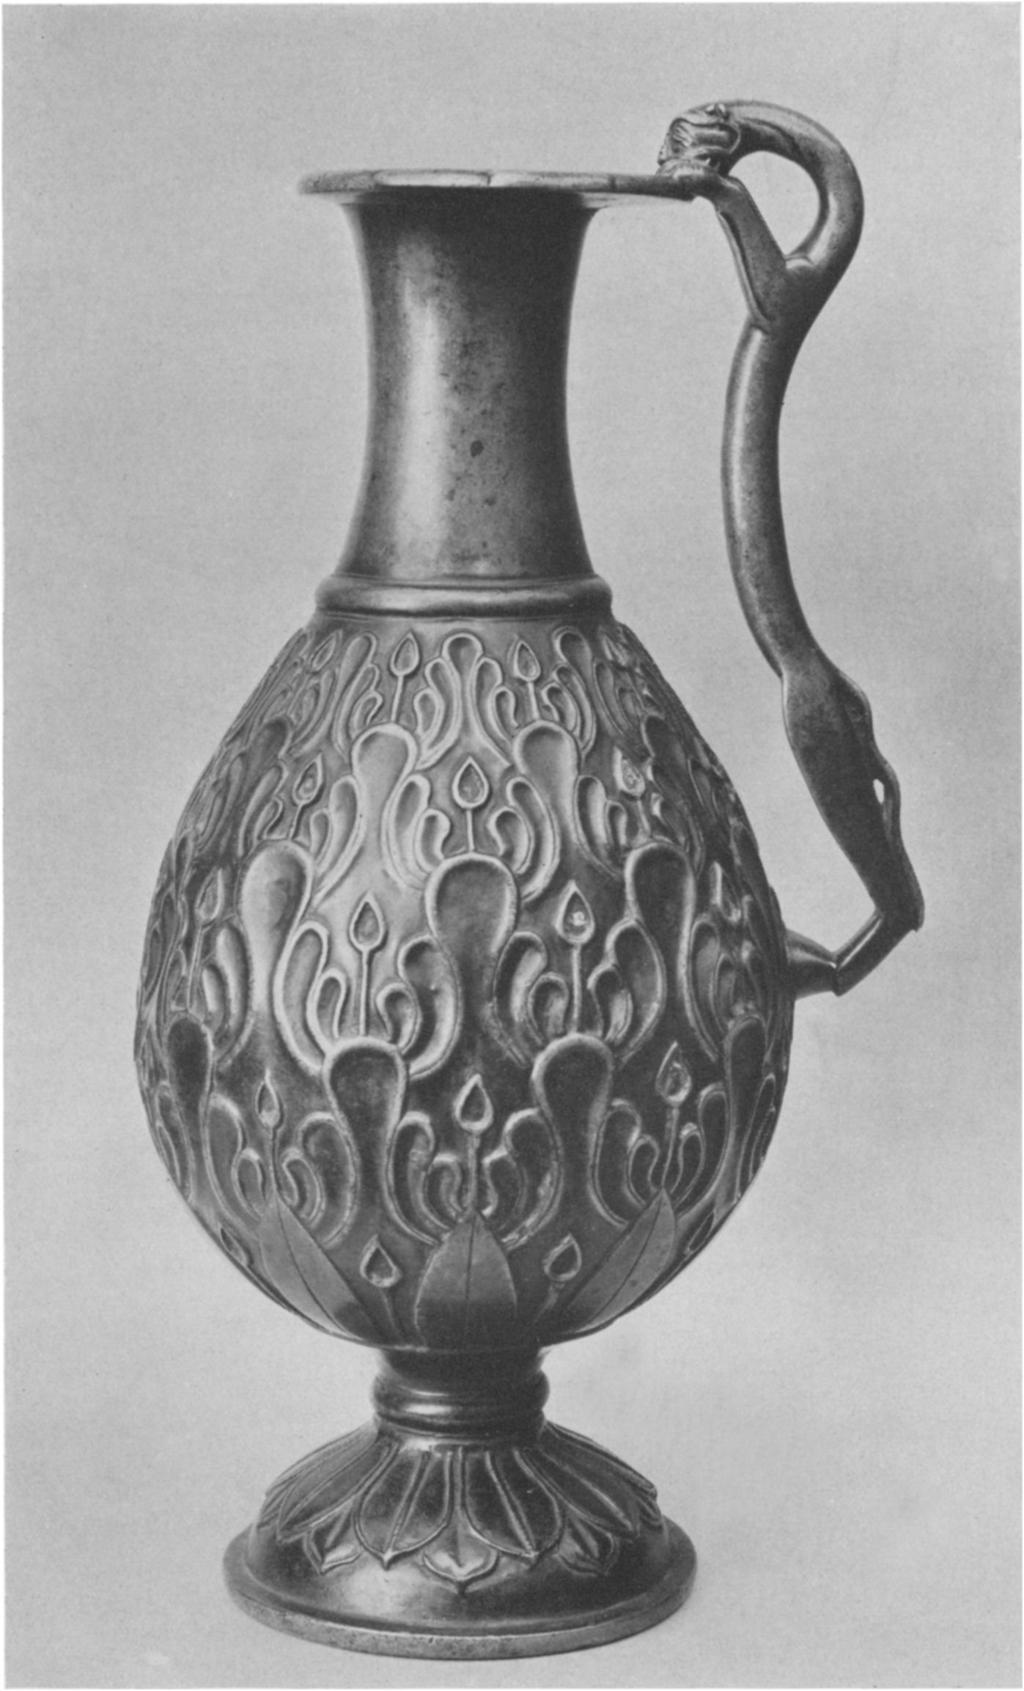 Bronze ewer, Persian, Sasanian period, vi century.